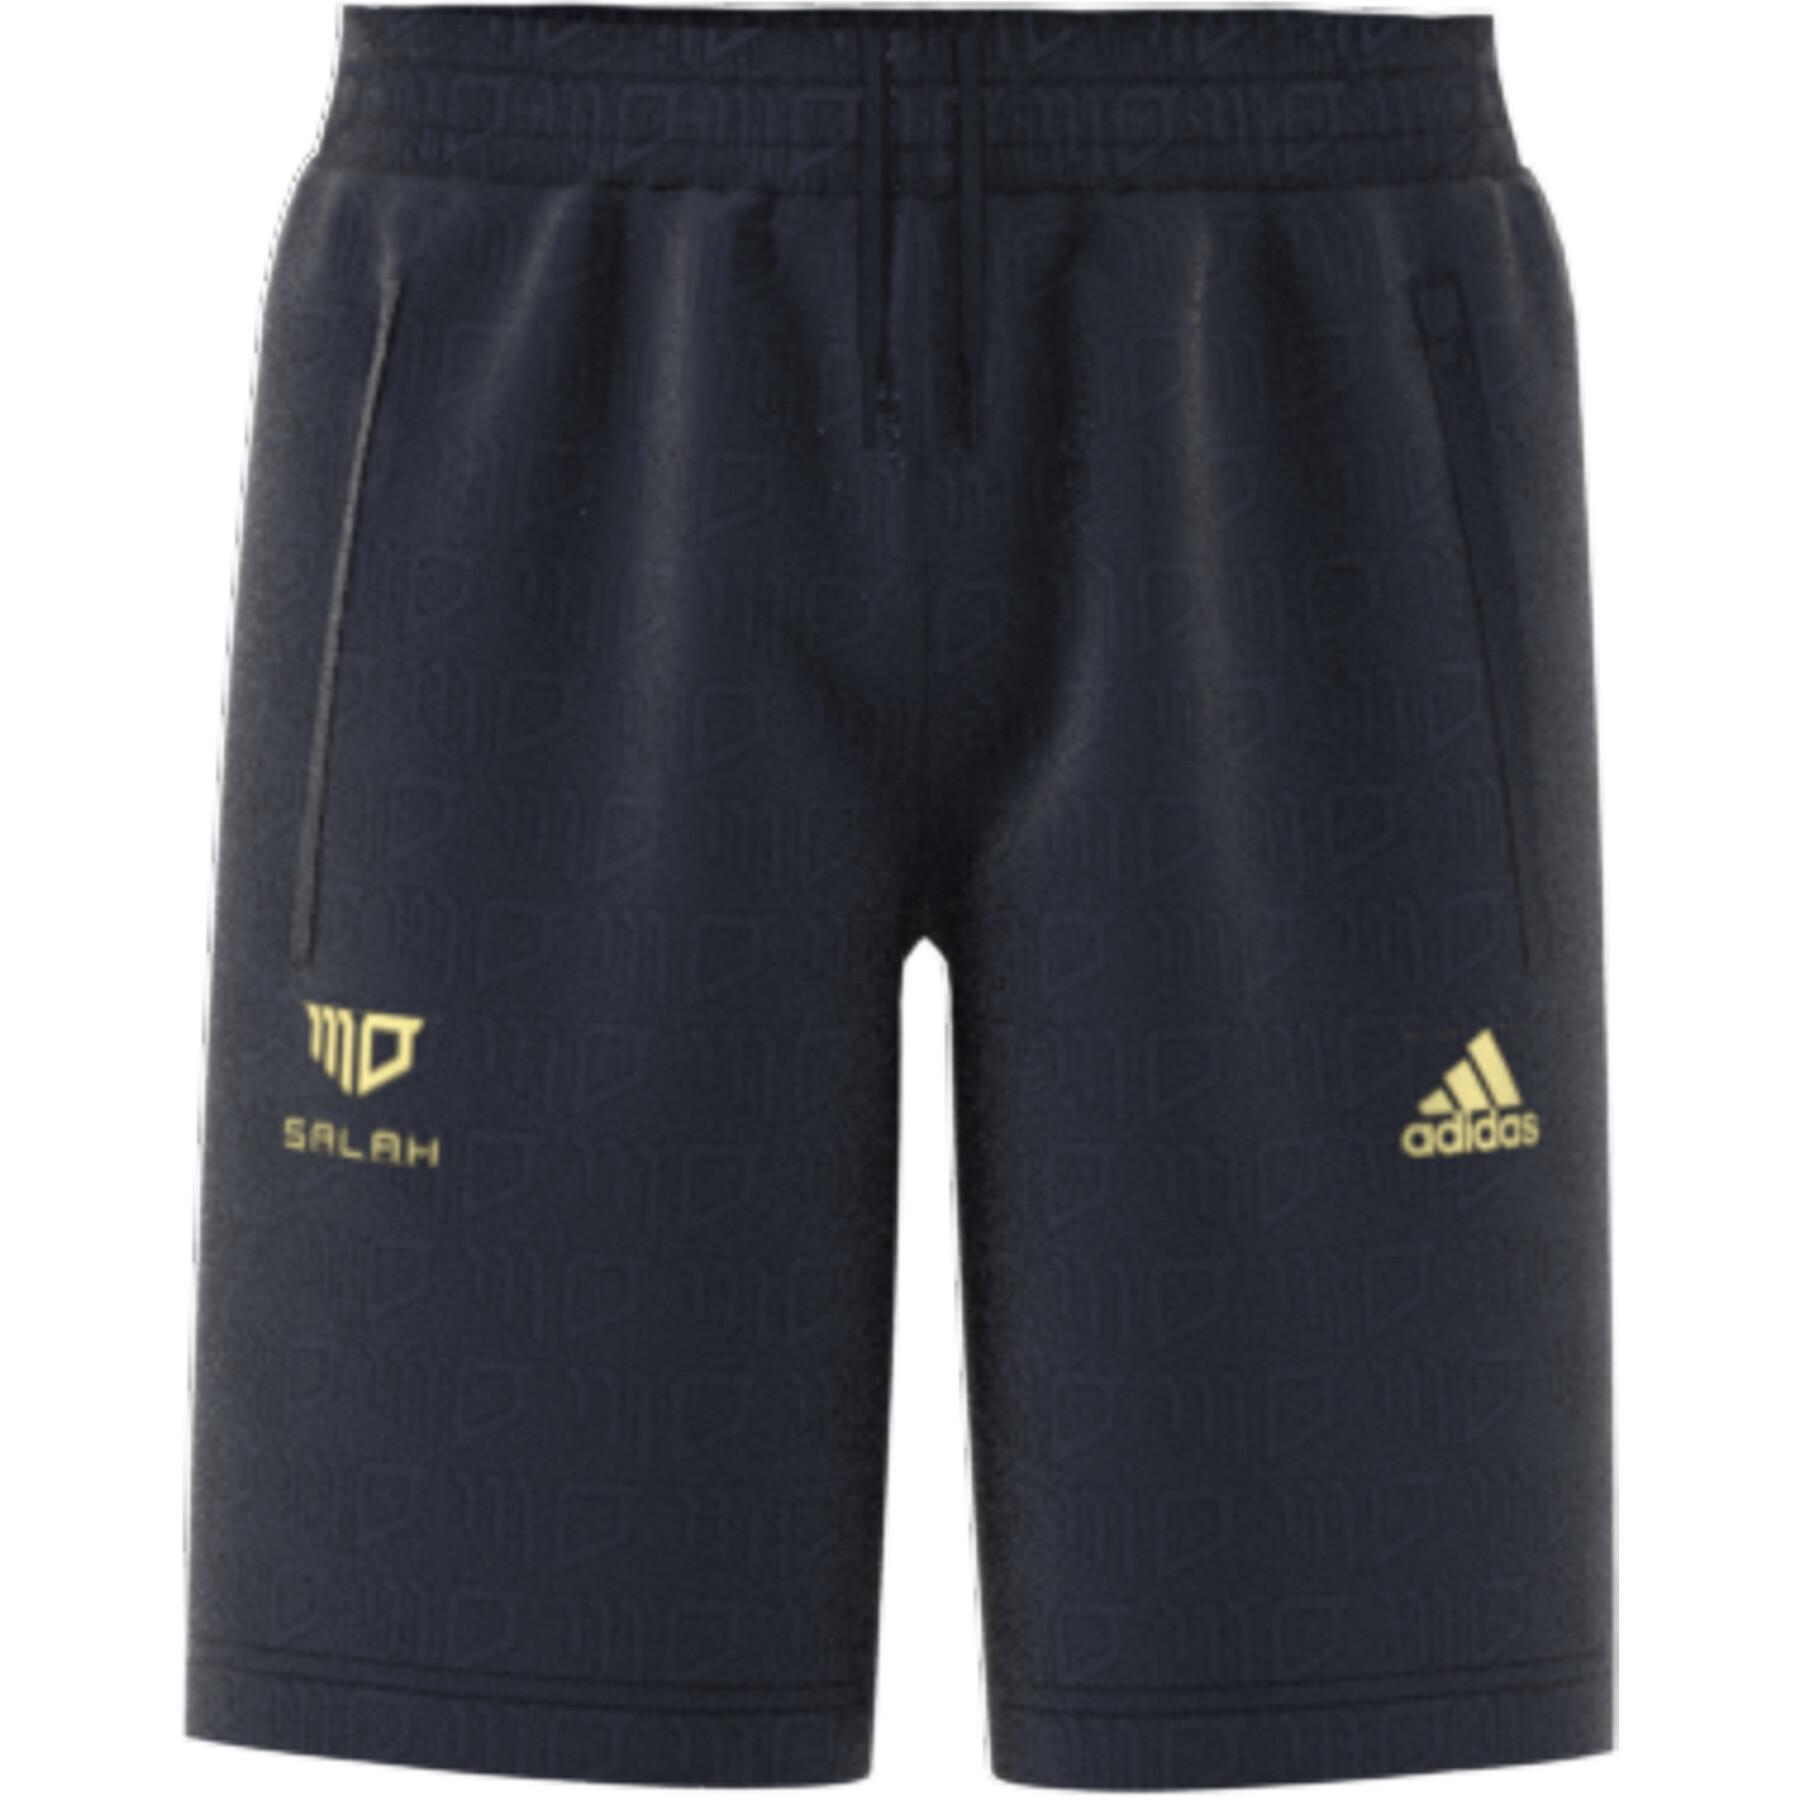 Children's shorts adidas Salah Aeroready Football